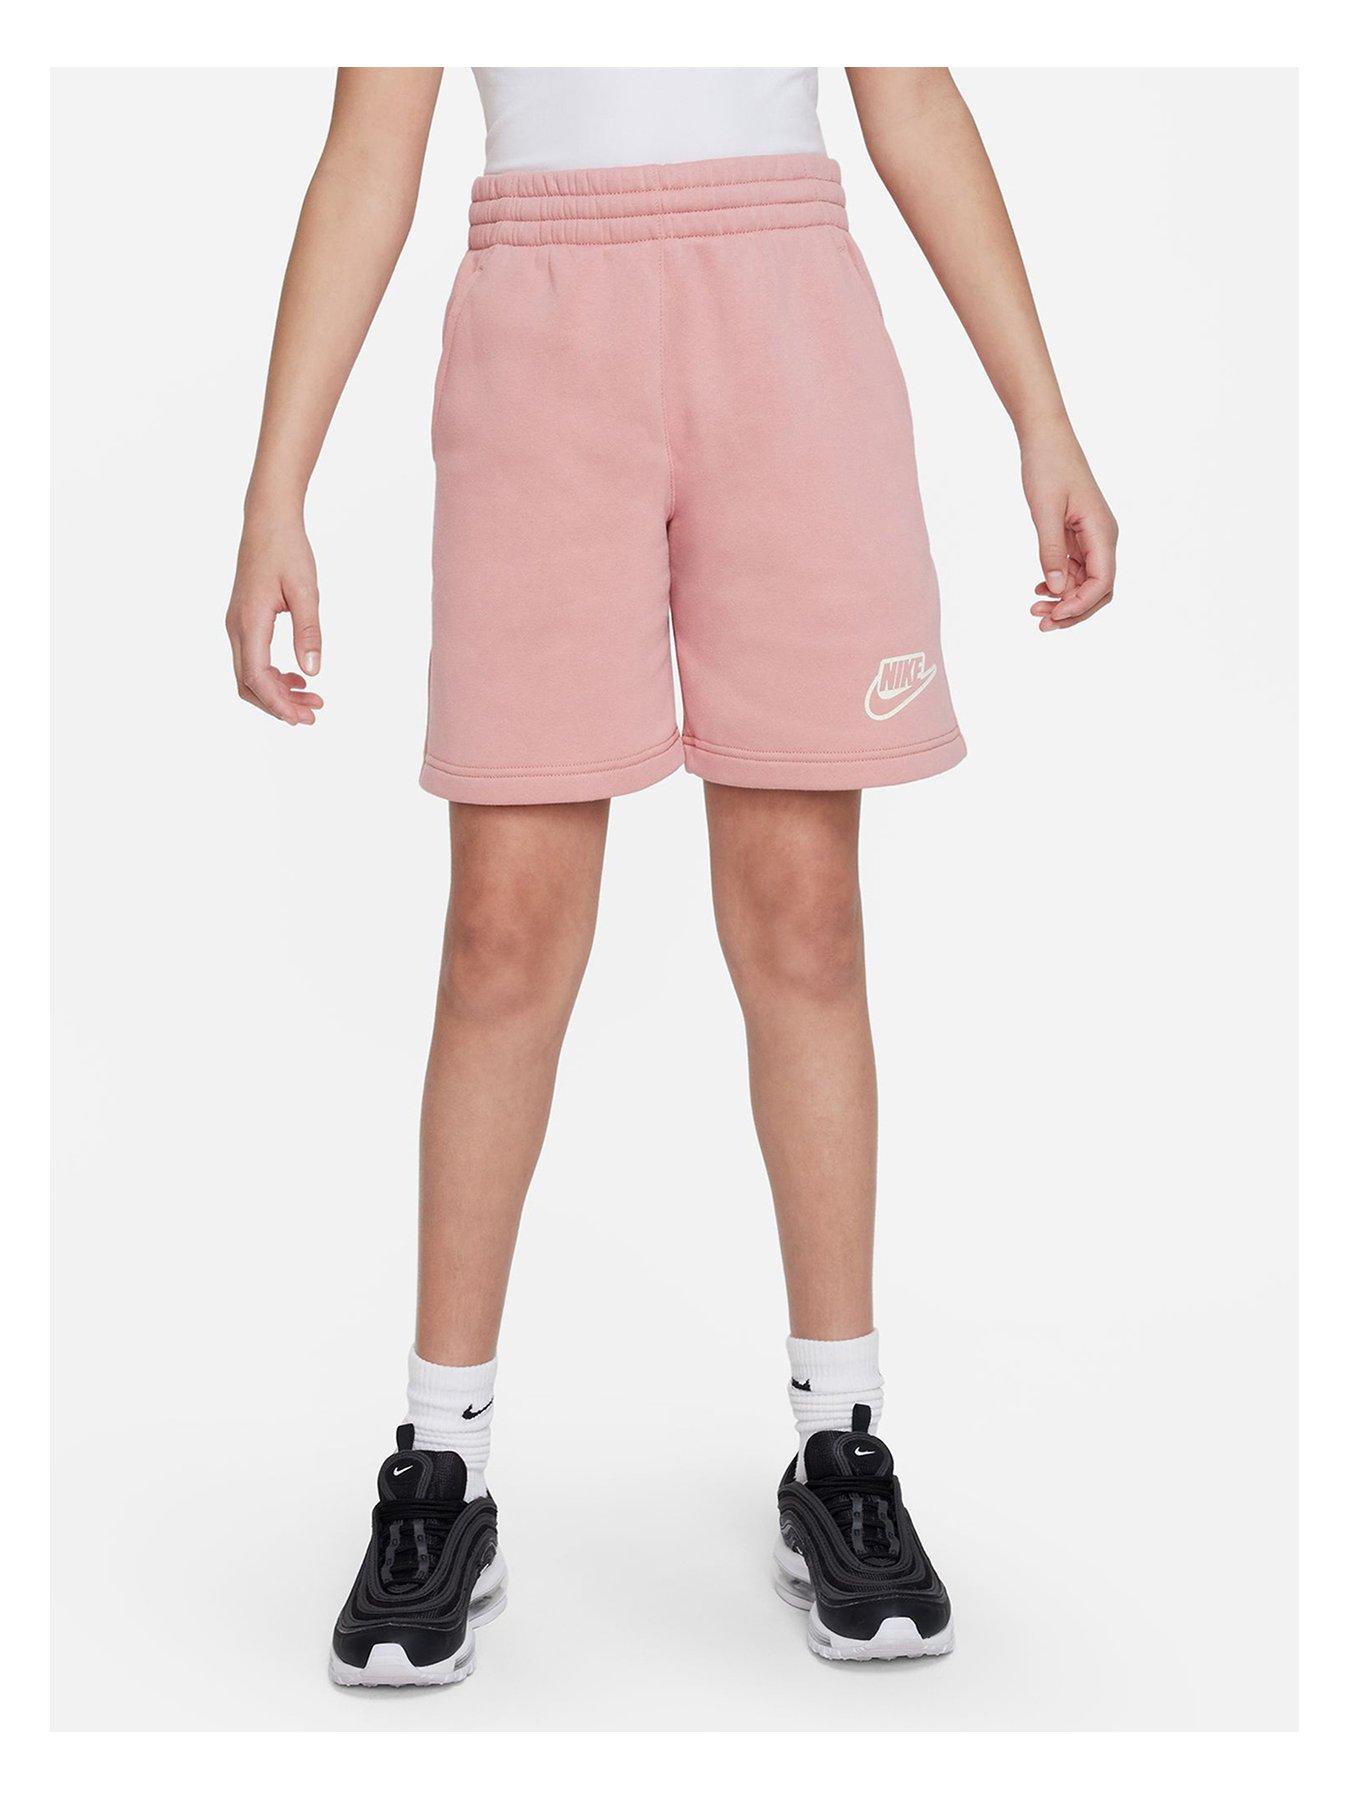 Nike Sportswear CLUB CREW - Sweatshirt - med soft pink/white/pink